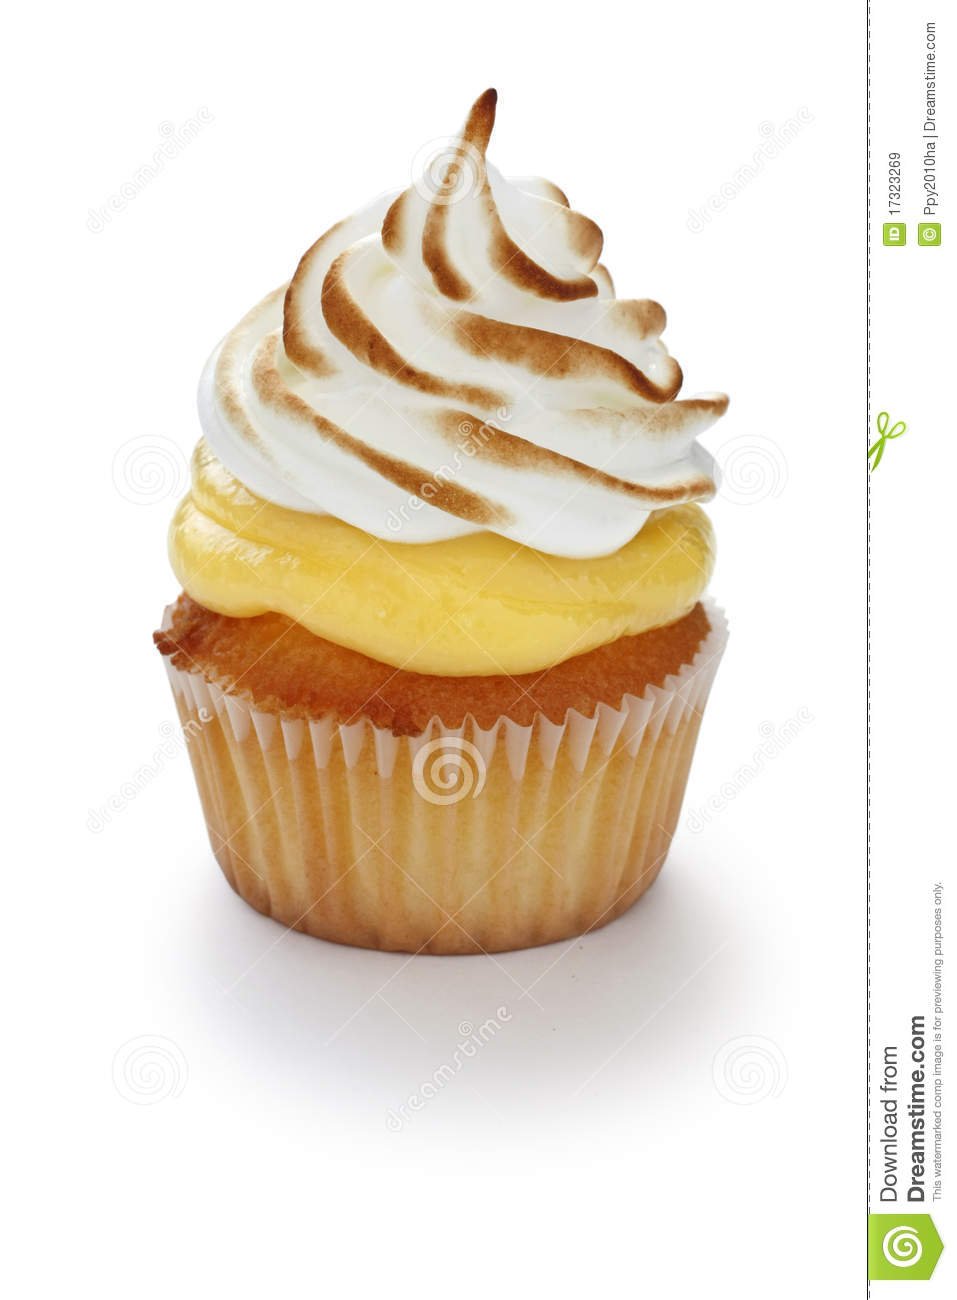 Lemon Meringue Cupcake Royalty Free Stock Images   Image  17323269